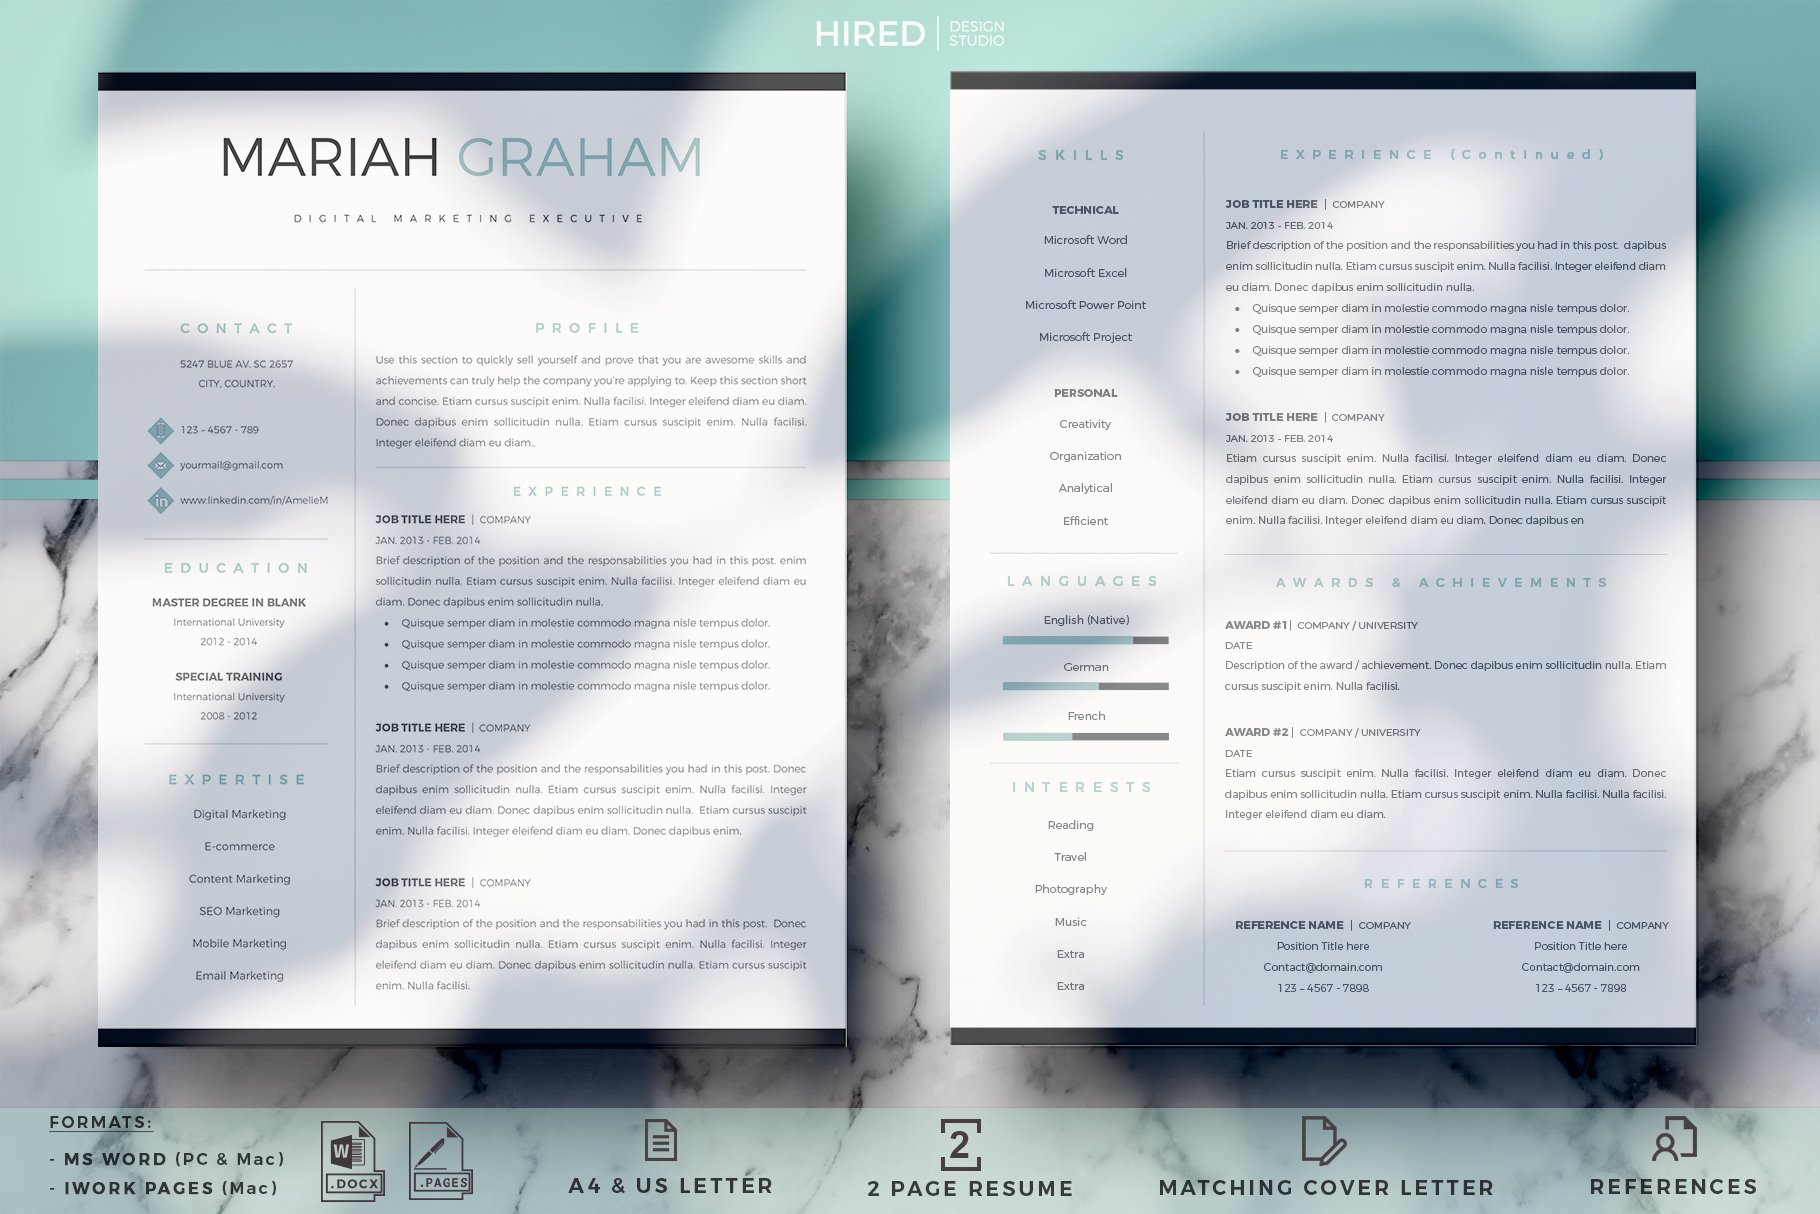 Modern Resume design + Cover Letter preview image.